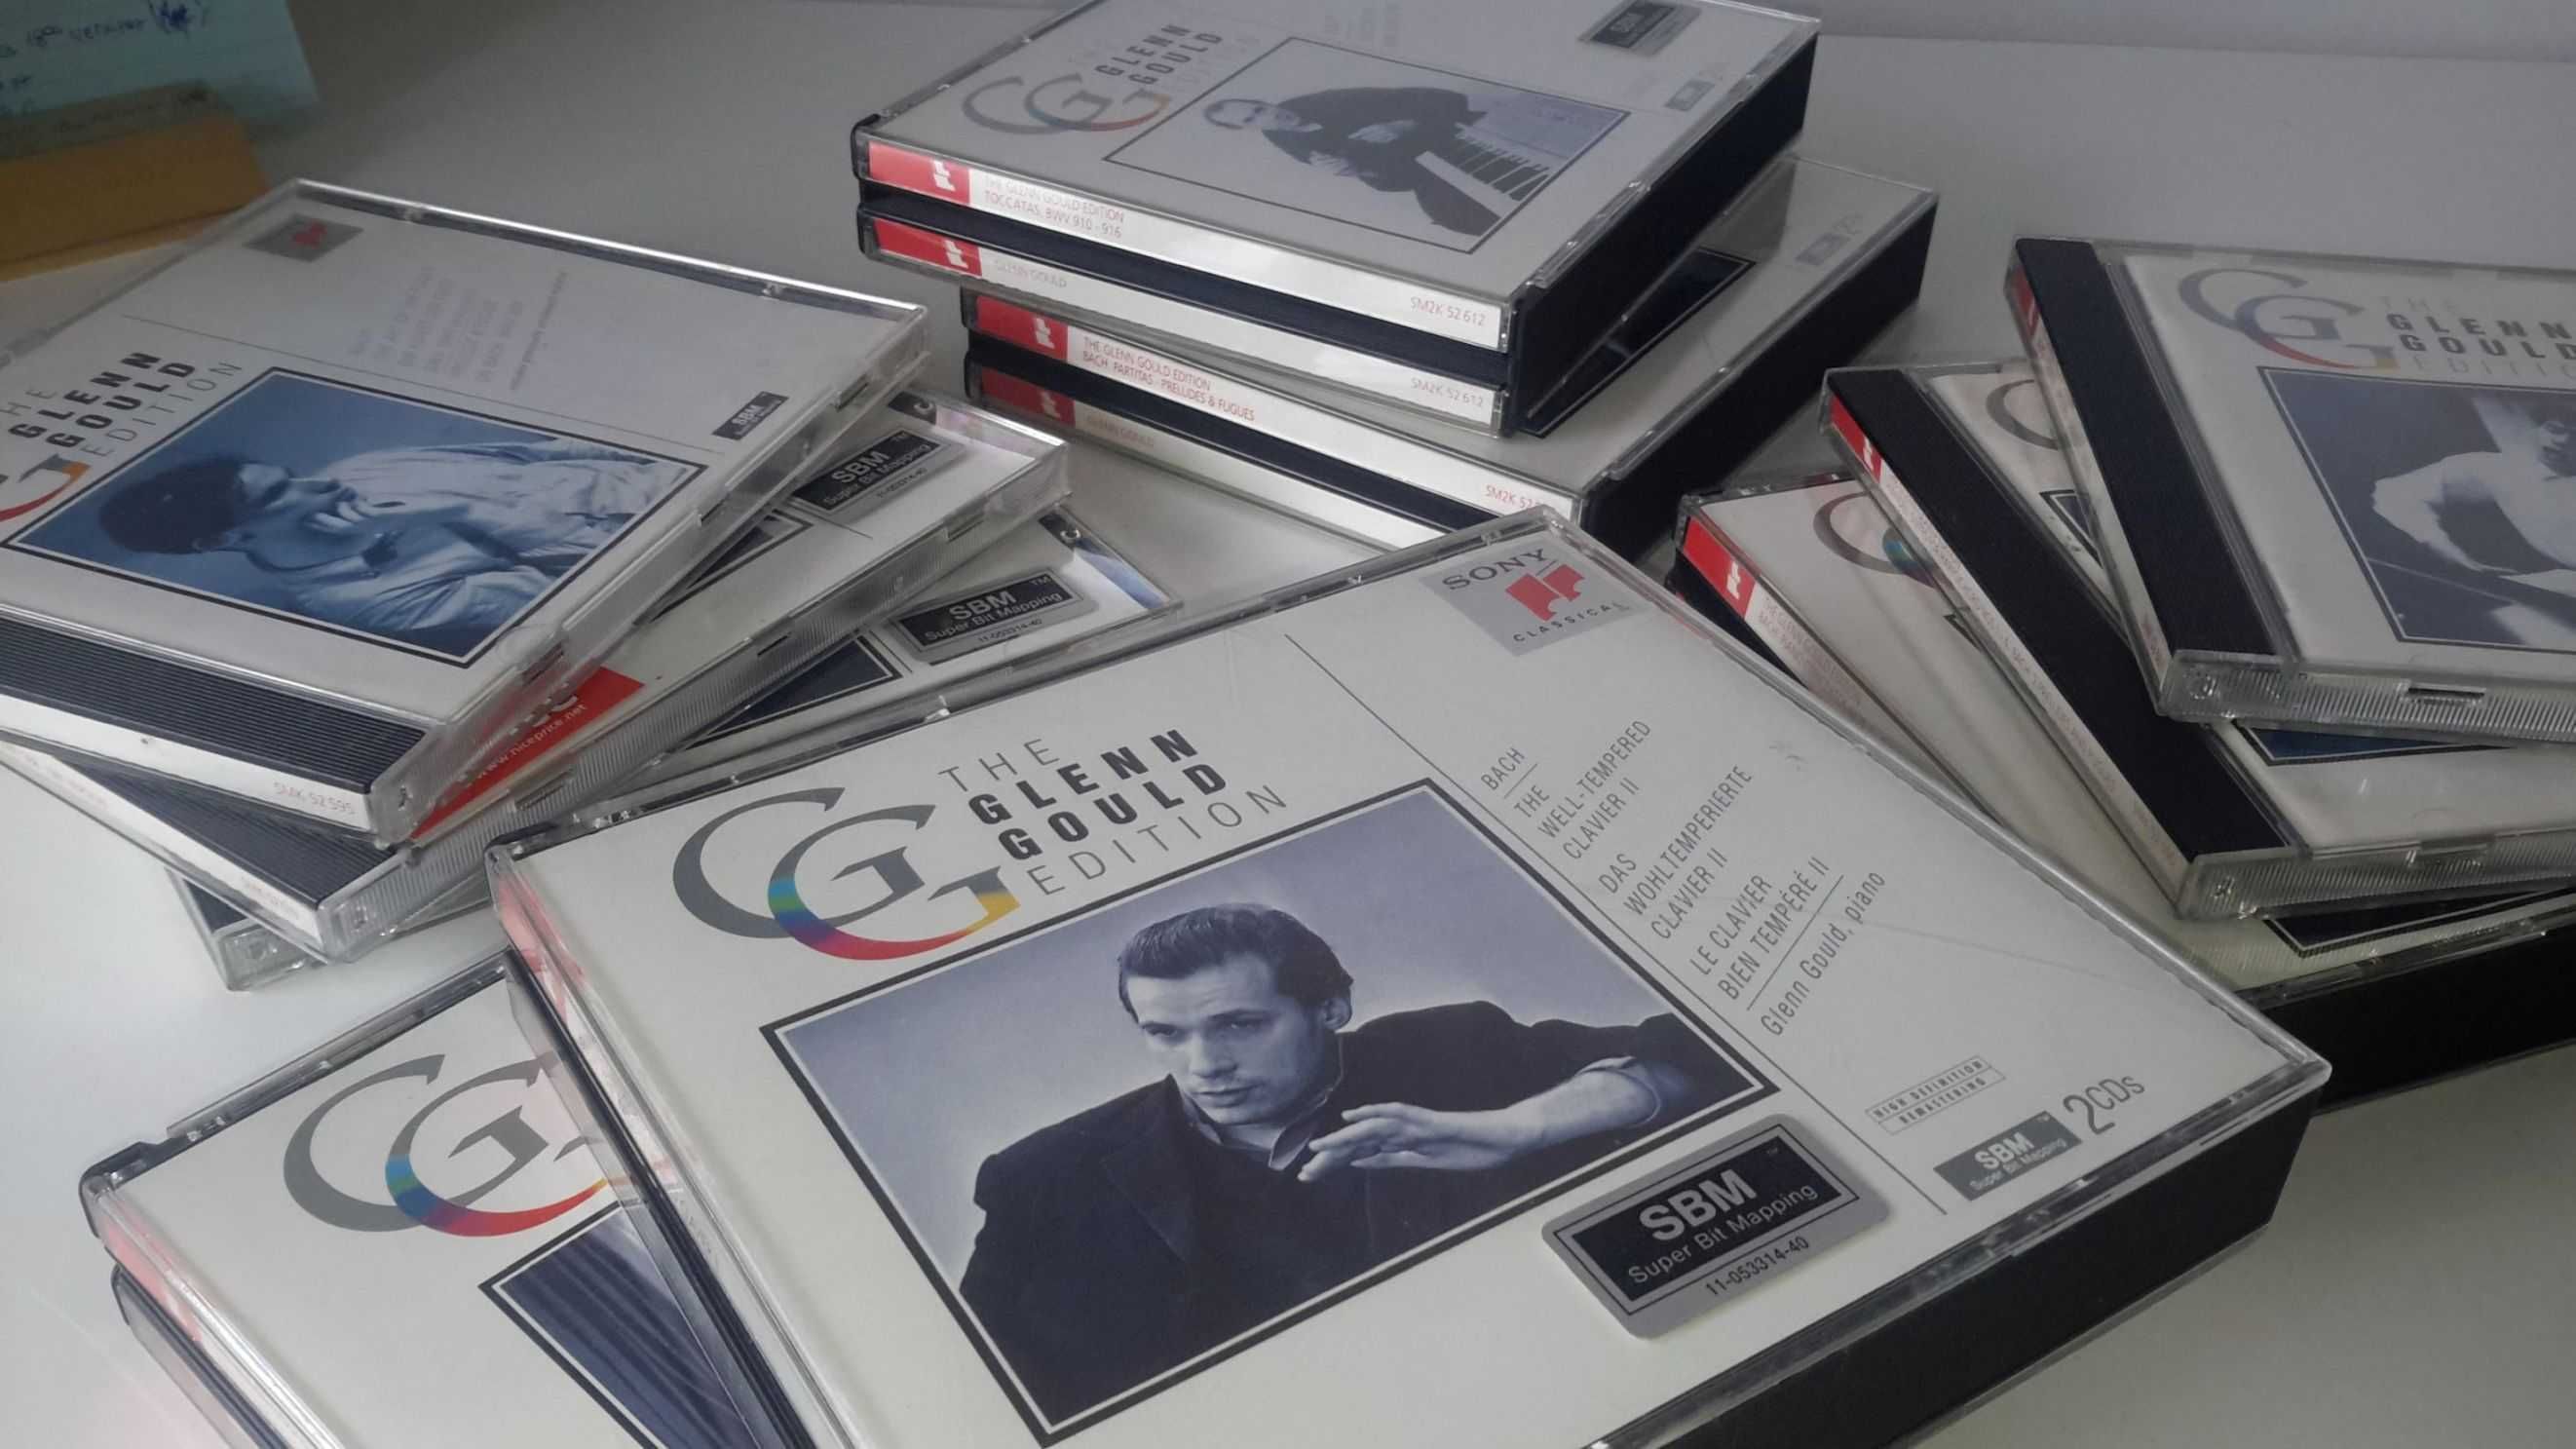 płyty CD z serii "The Glenn Gould Edition" [Sony]